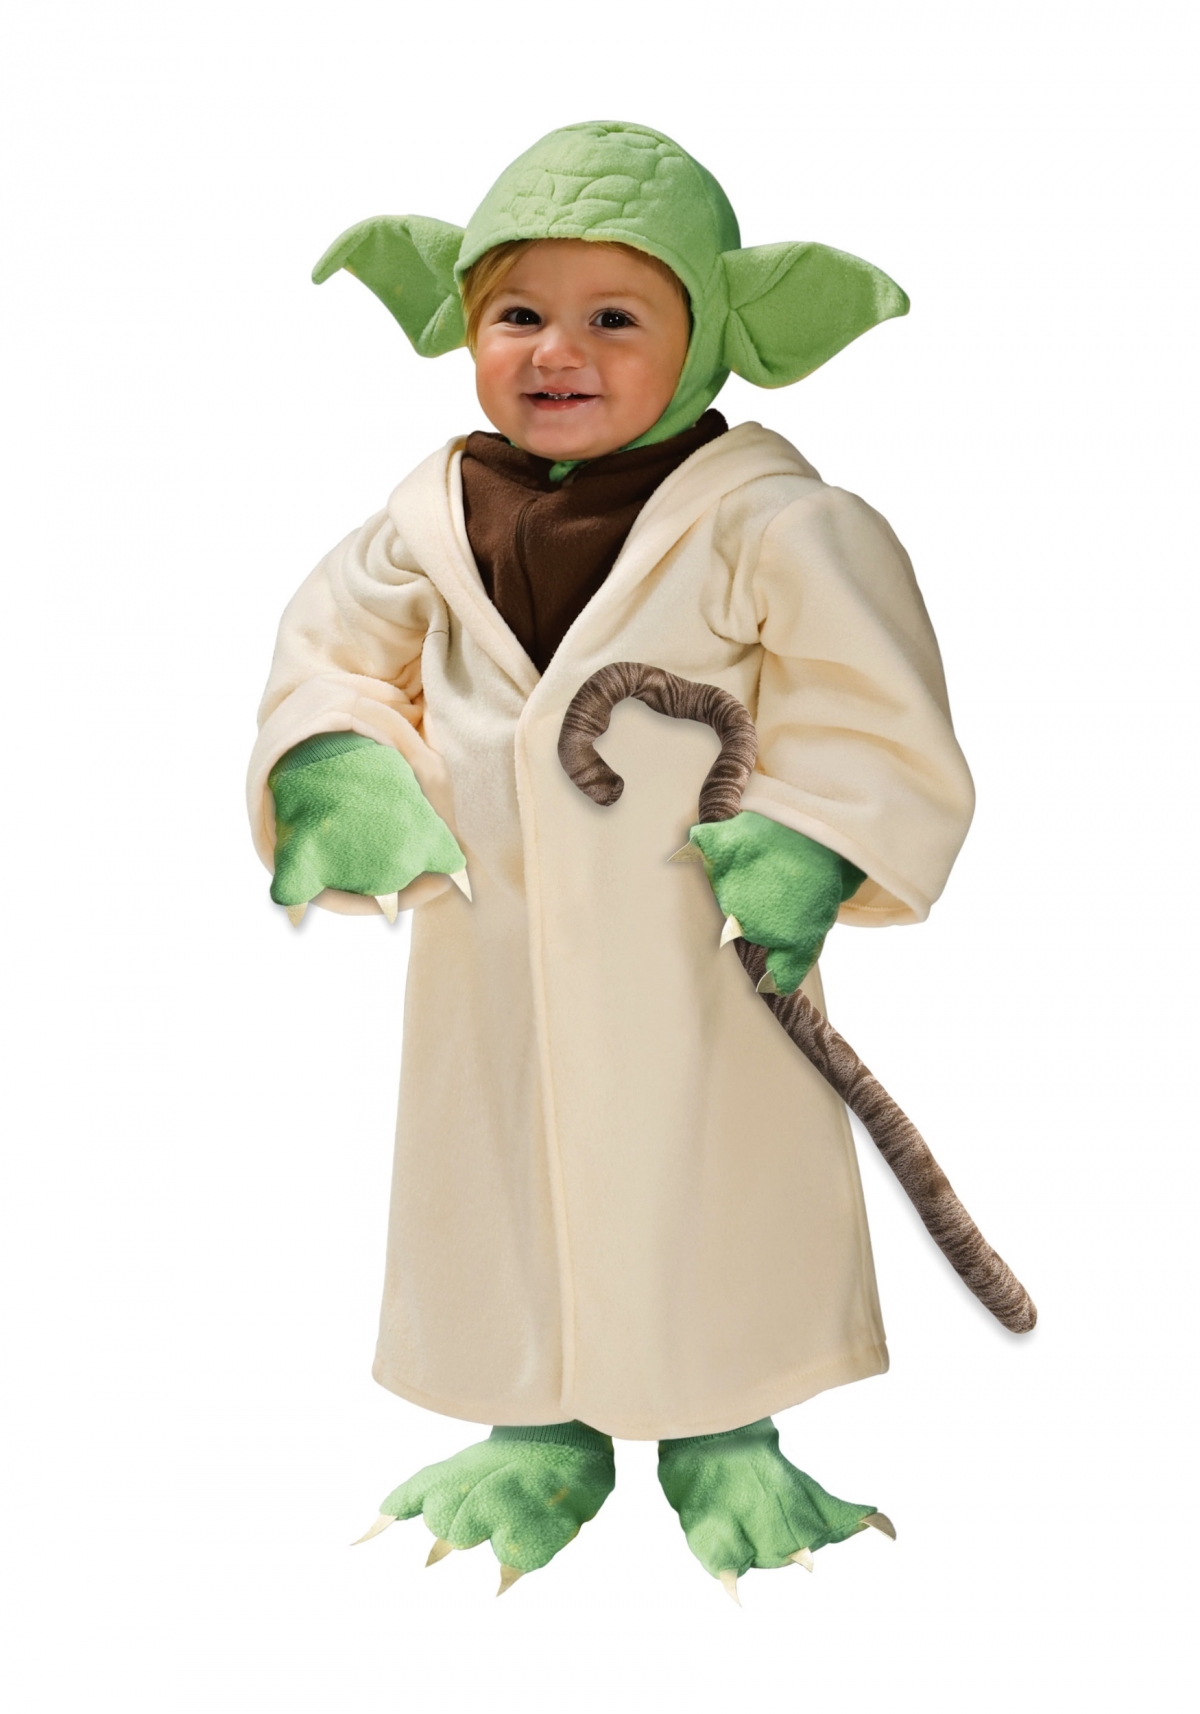 Halloween 2015: Cutest costume ideas for children